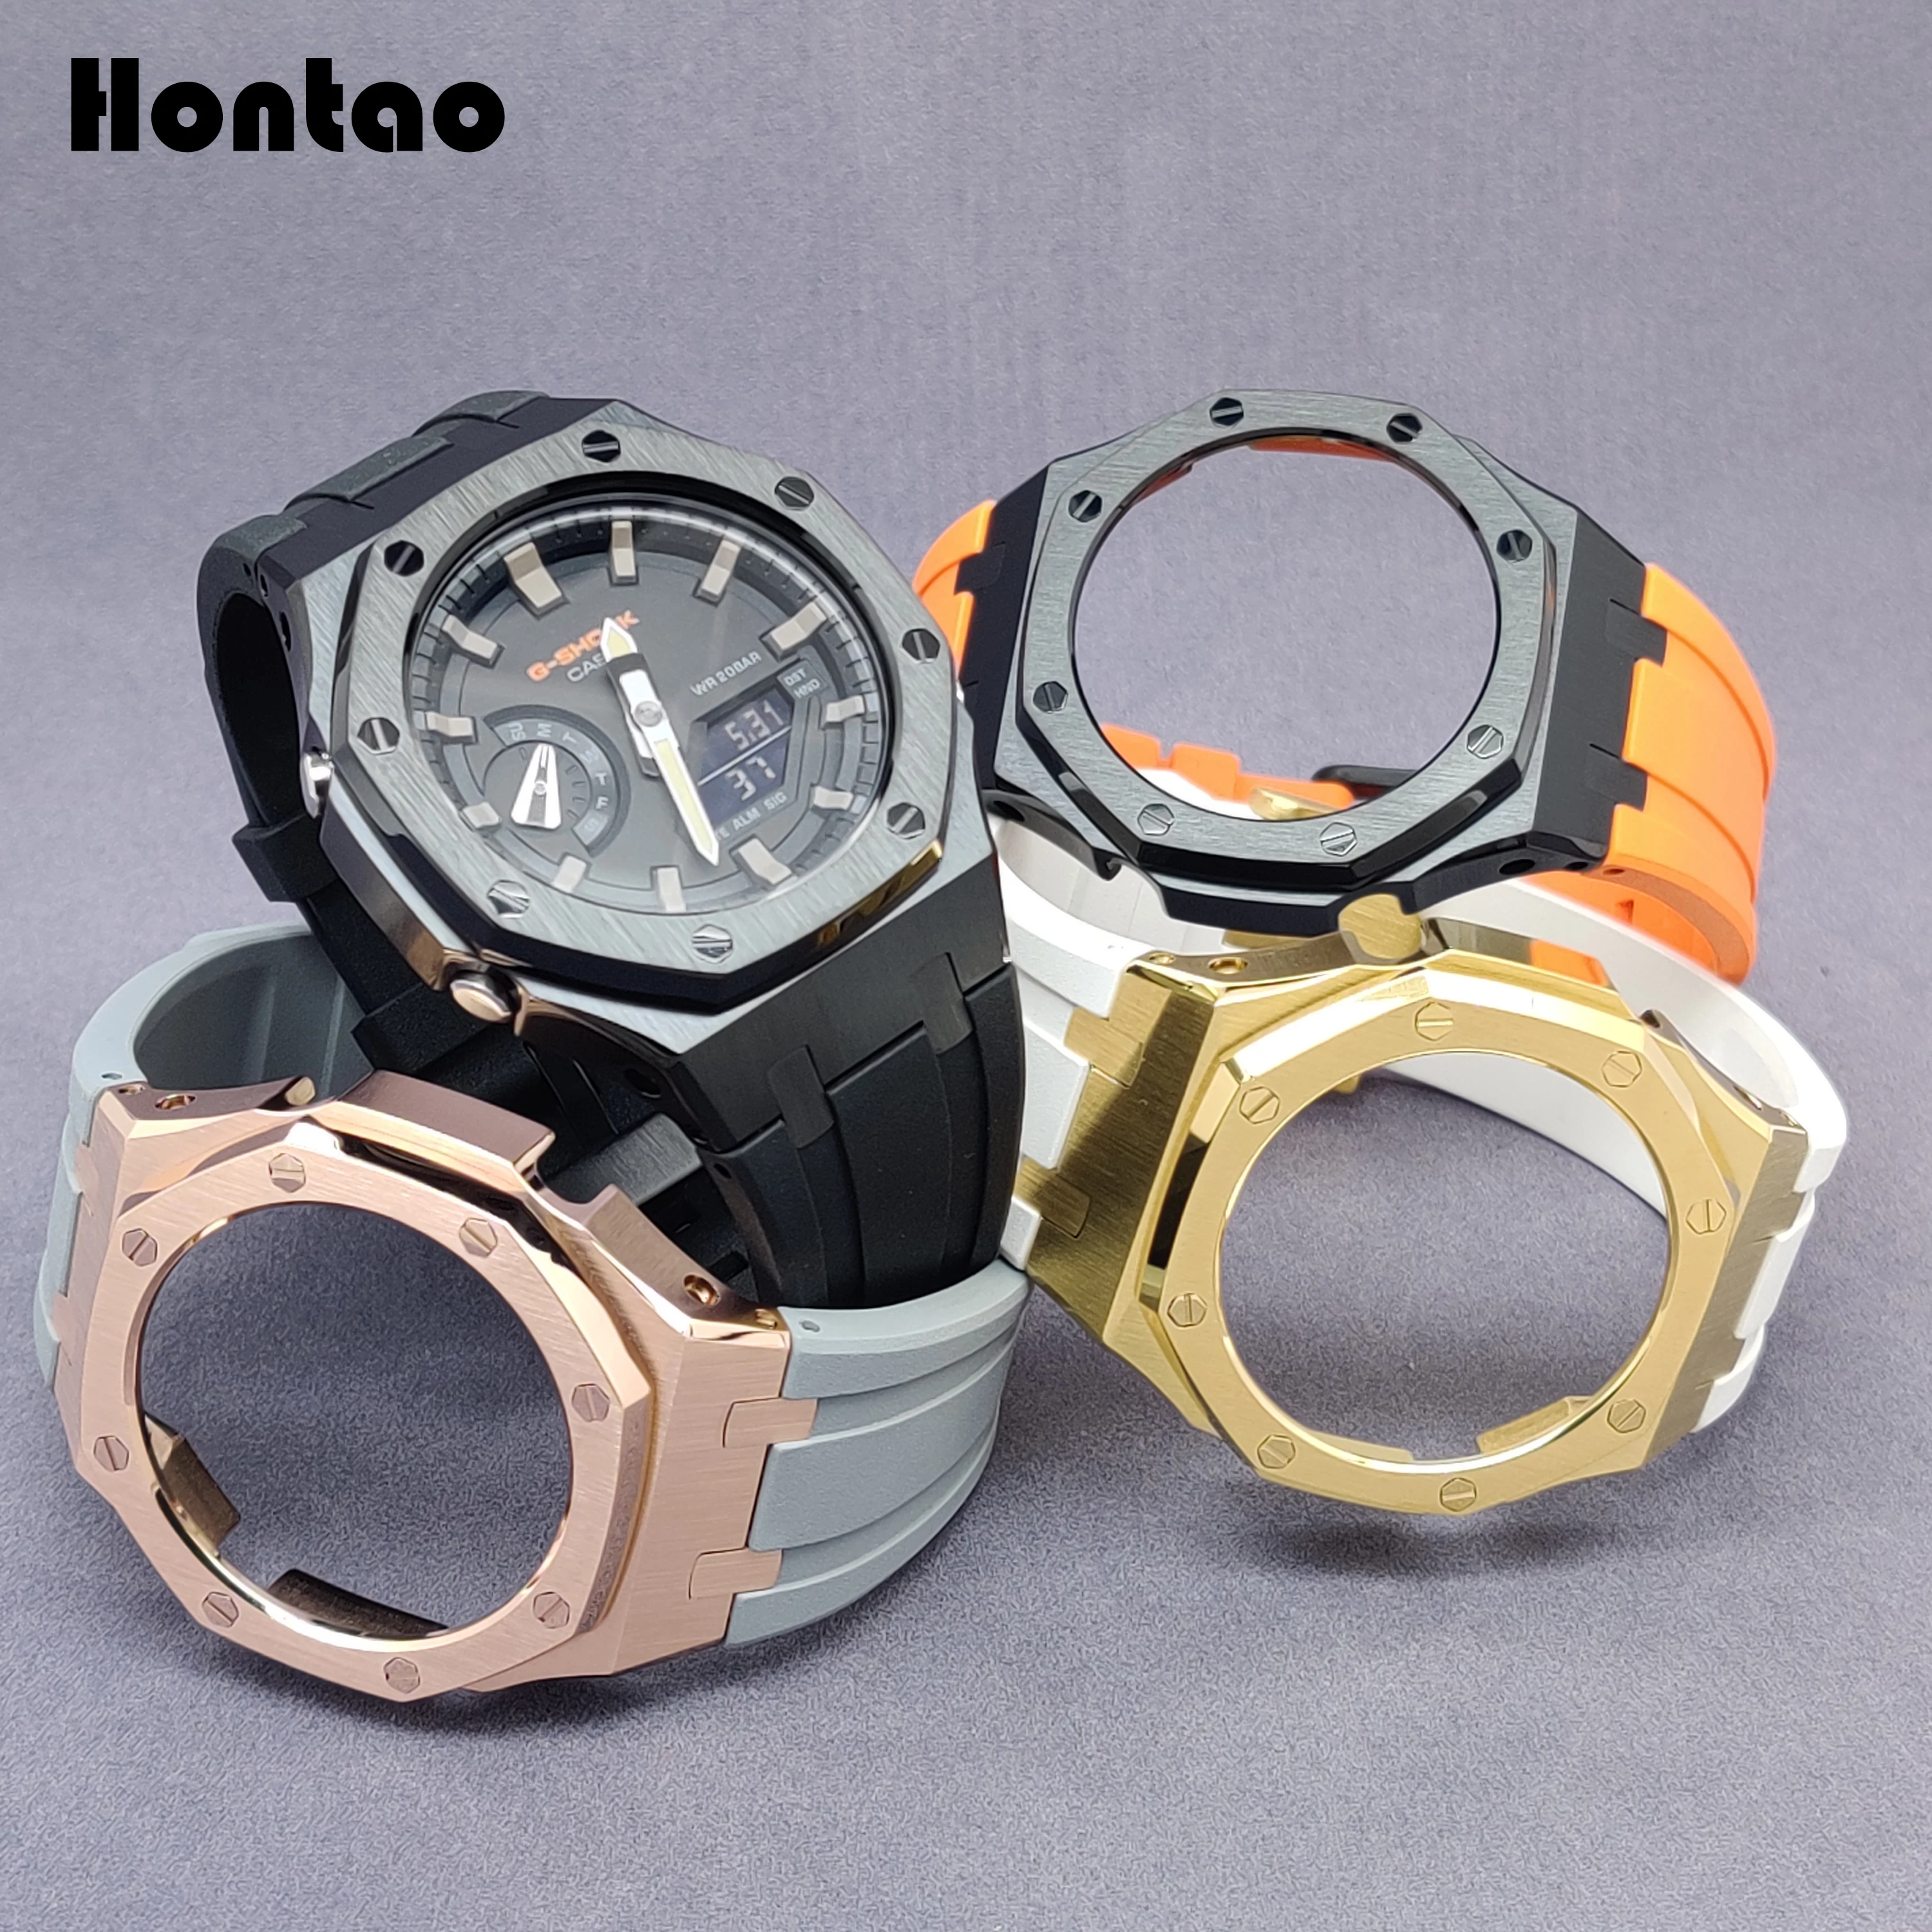 

Hontao CasiOak GA2100 3rd Generation Metal Bezel Fluorine Rubber Watch Strap Lengthen Watch Band for Casio G-Shock GA-2100/2110